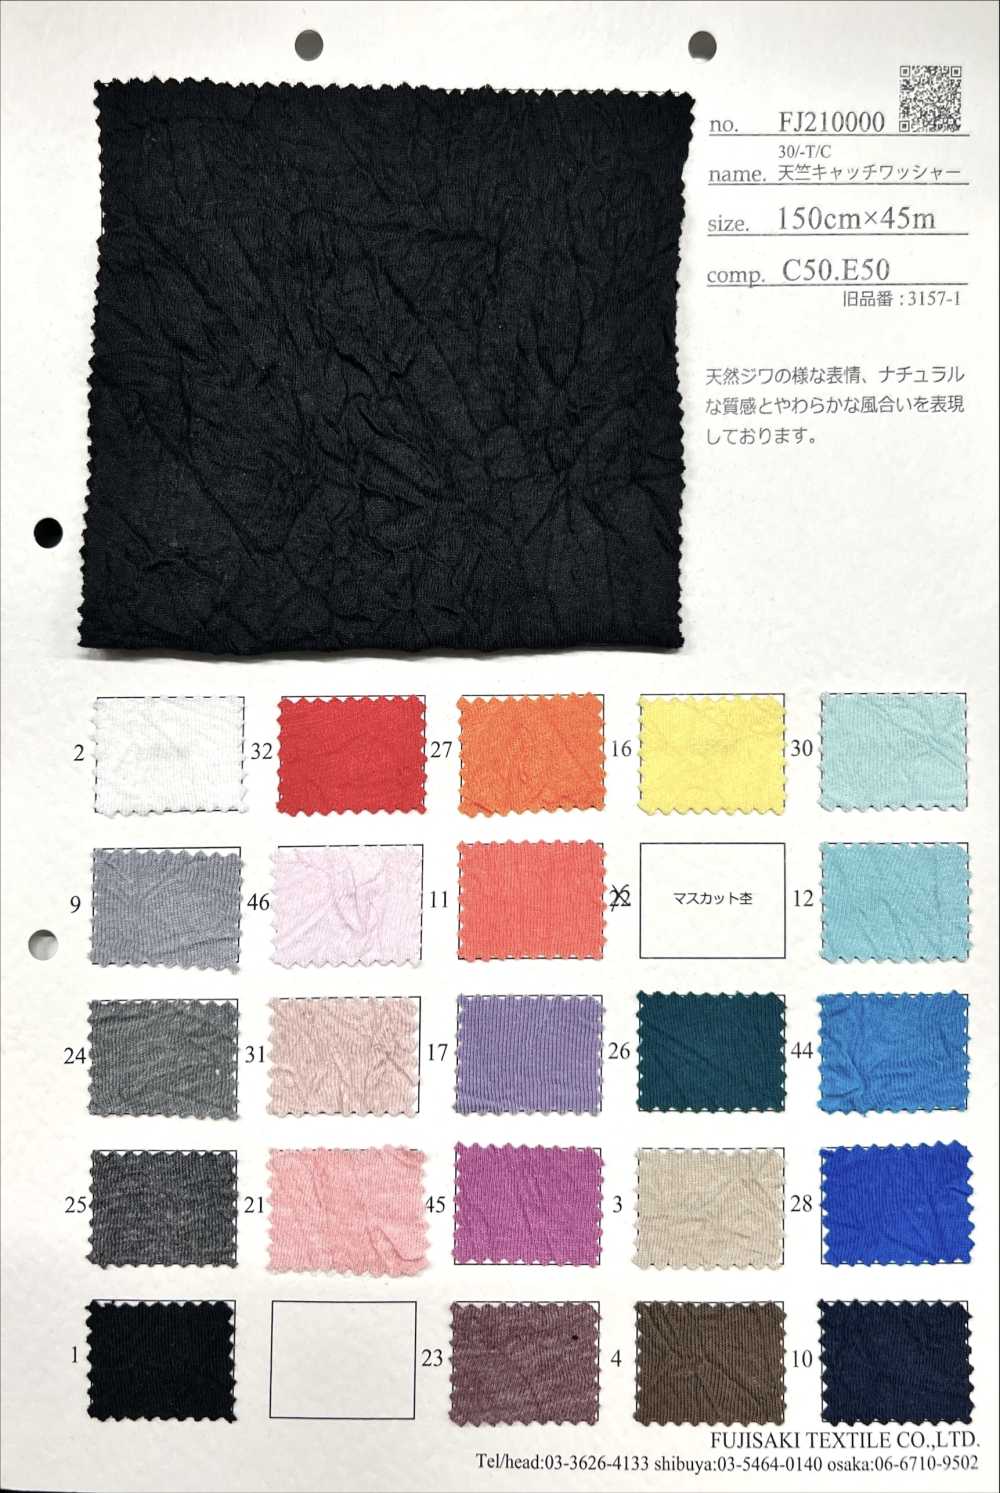 FJ210000 30/-T/C 싱글 다이마루 캐치 와셔 가공[원단] Fujisaki Textile